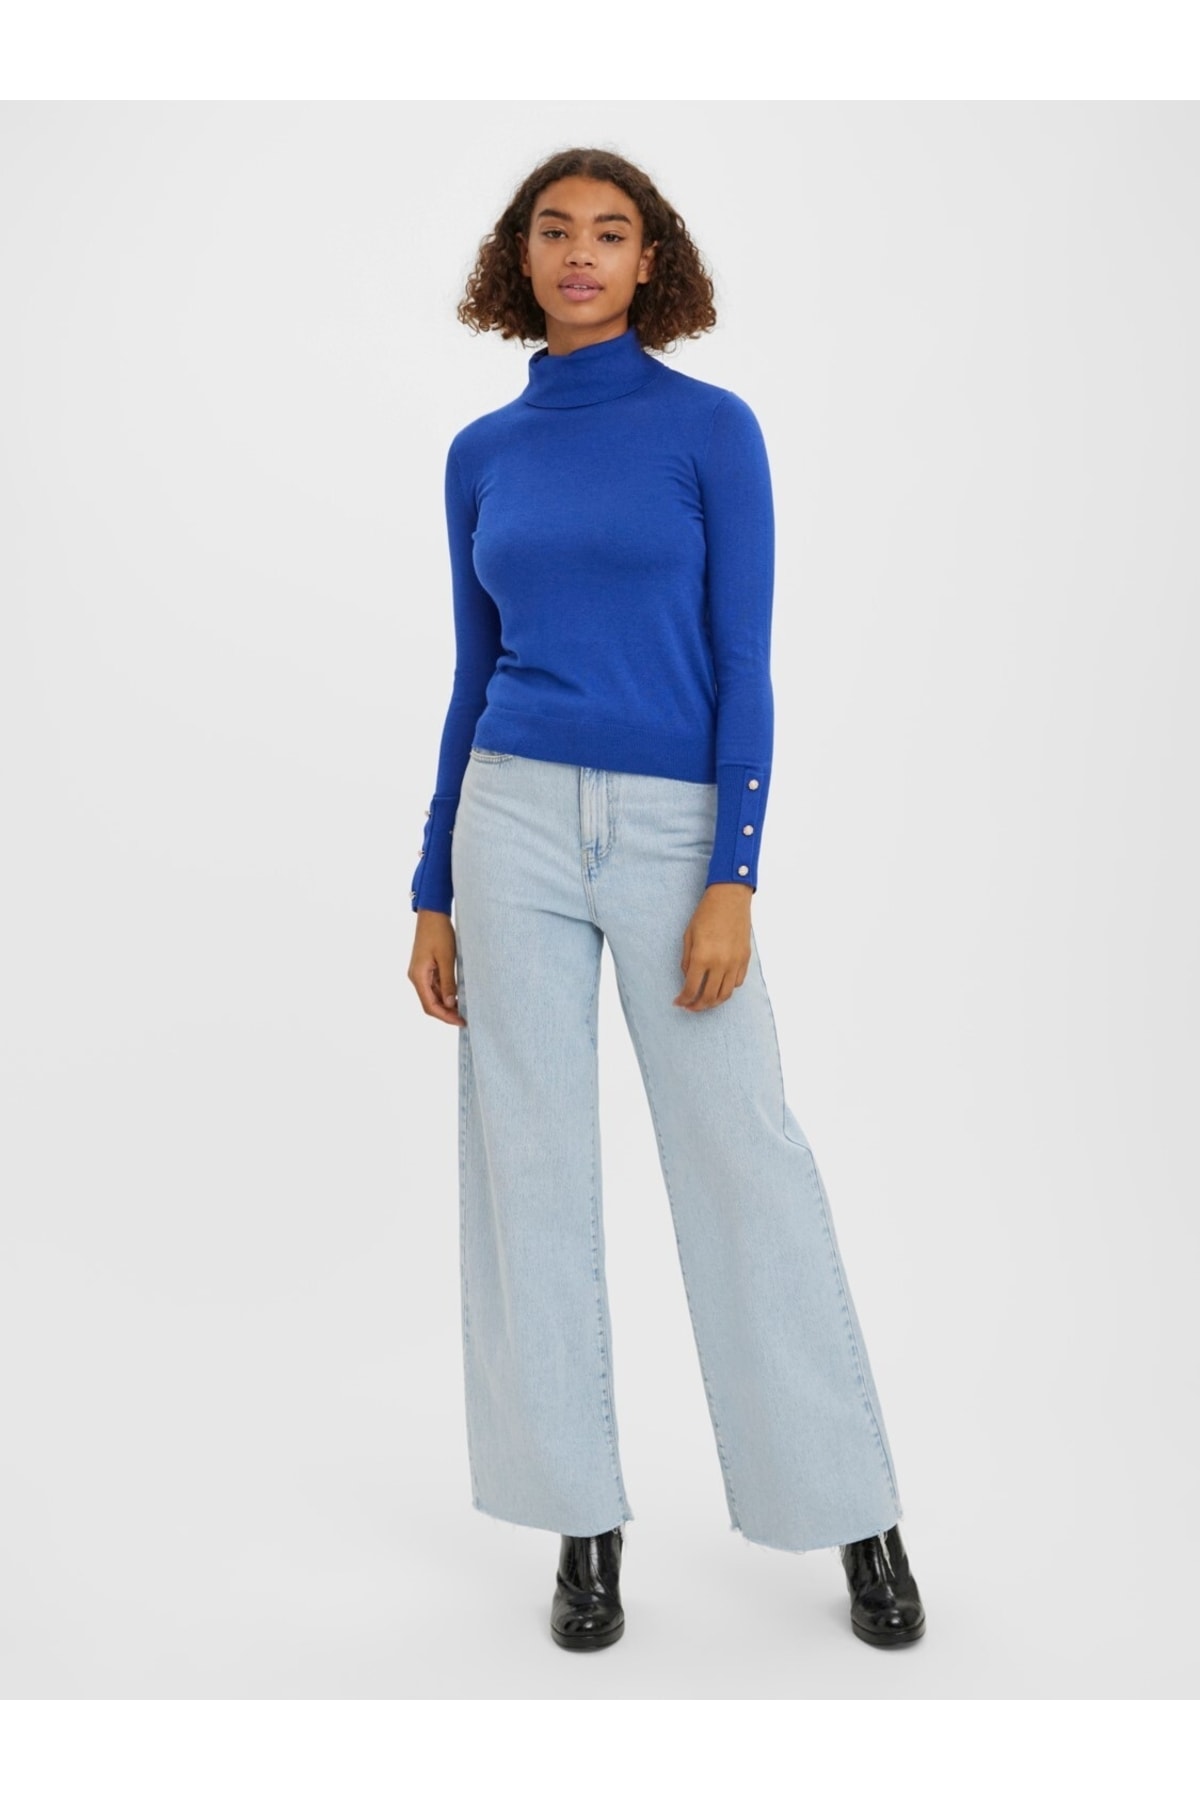 Vero Moda Sweatshirt Blau Regular Fit Fast ausverkauft